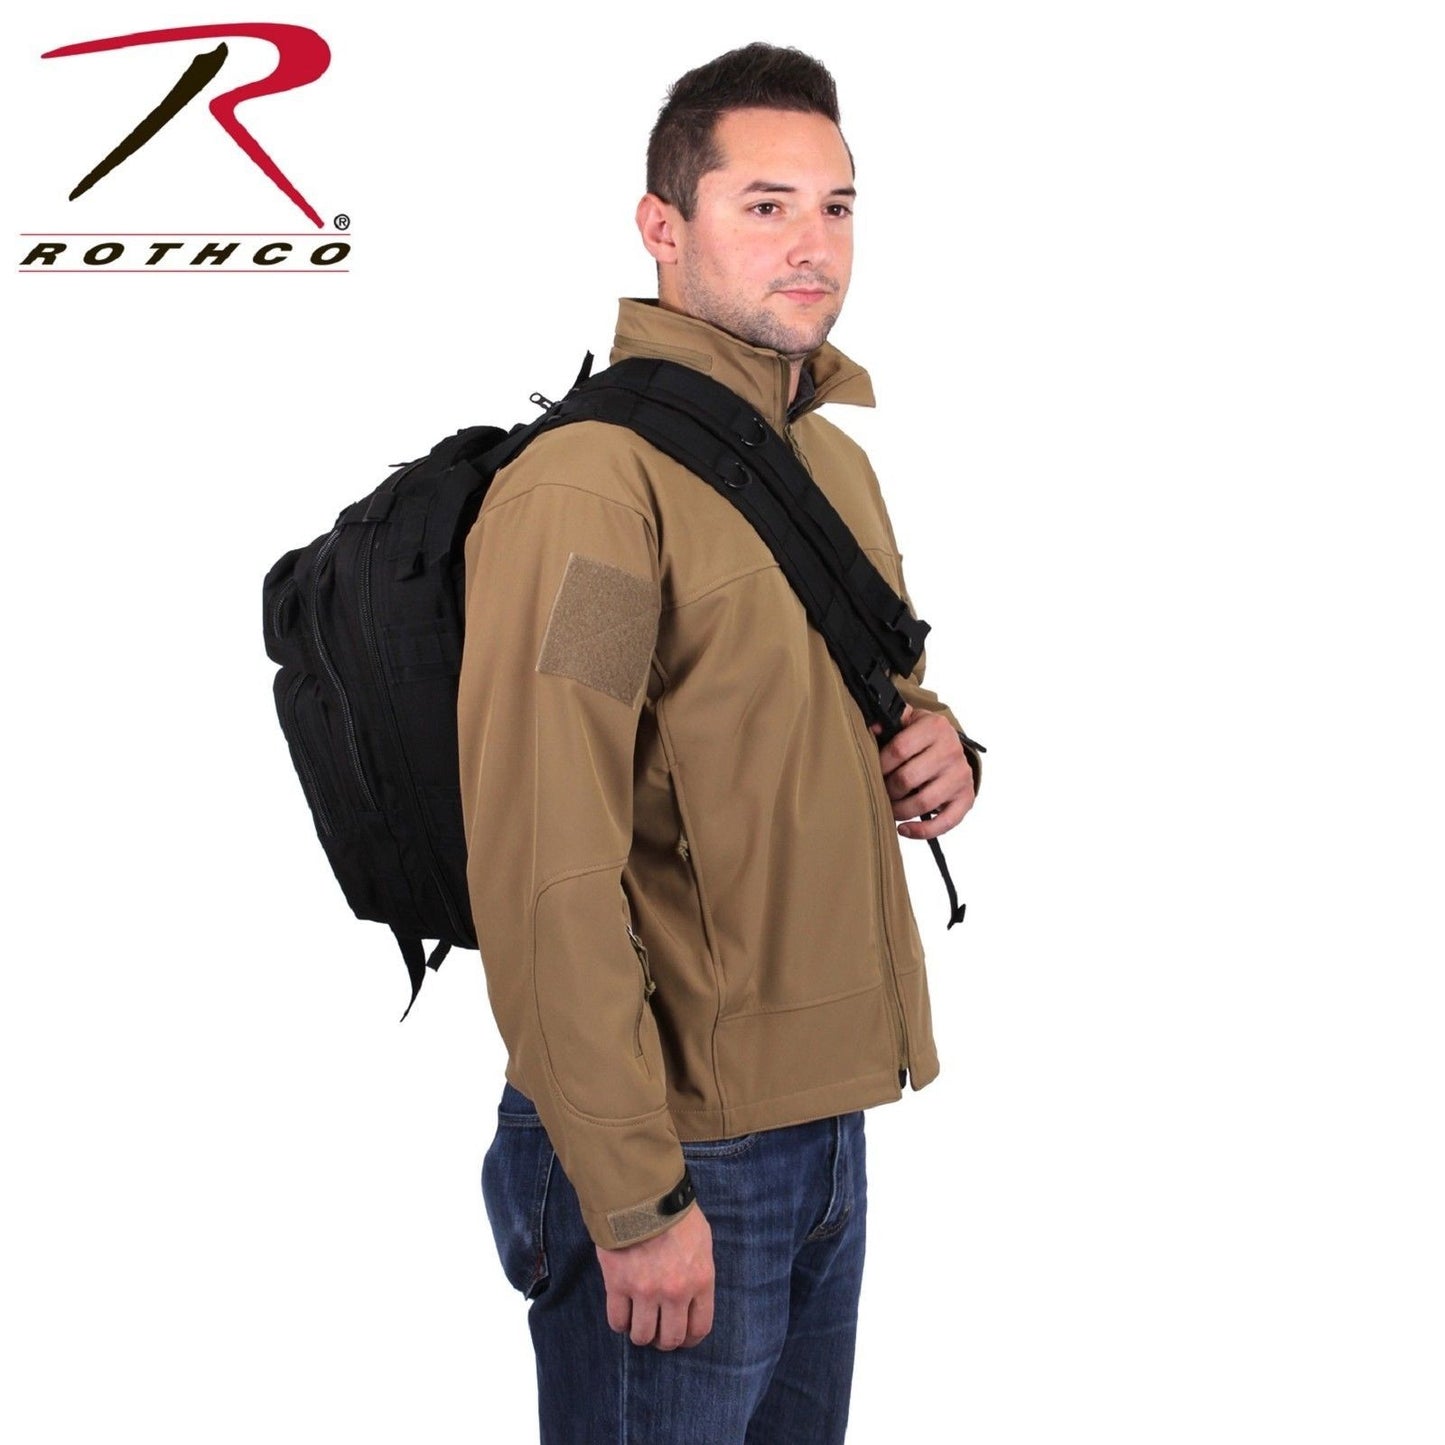 Black Rothco Convertible Medium Transport MOLLE Backpack & Single Sling Pack